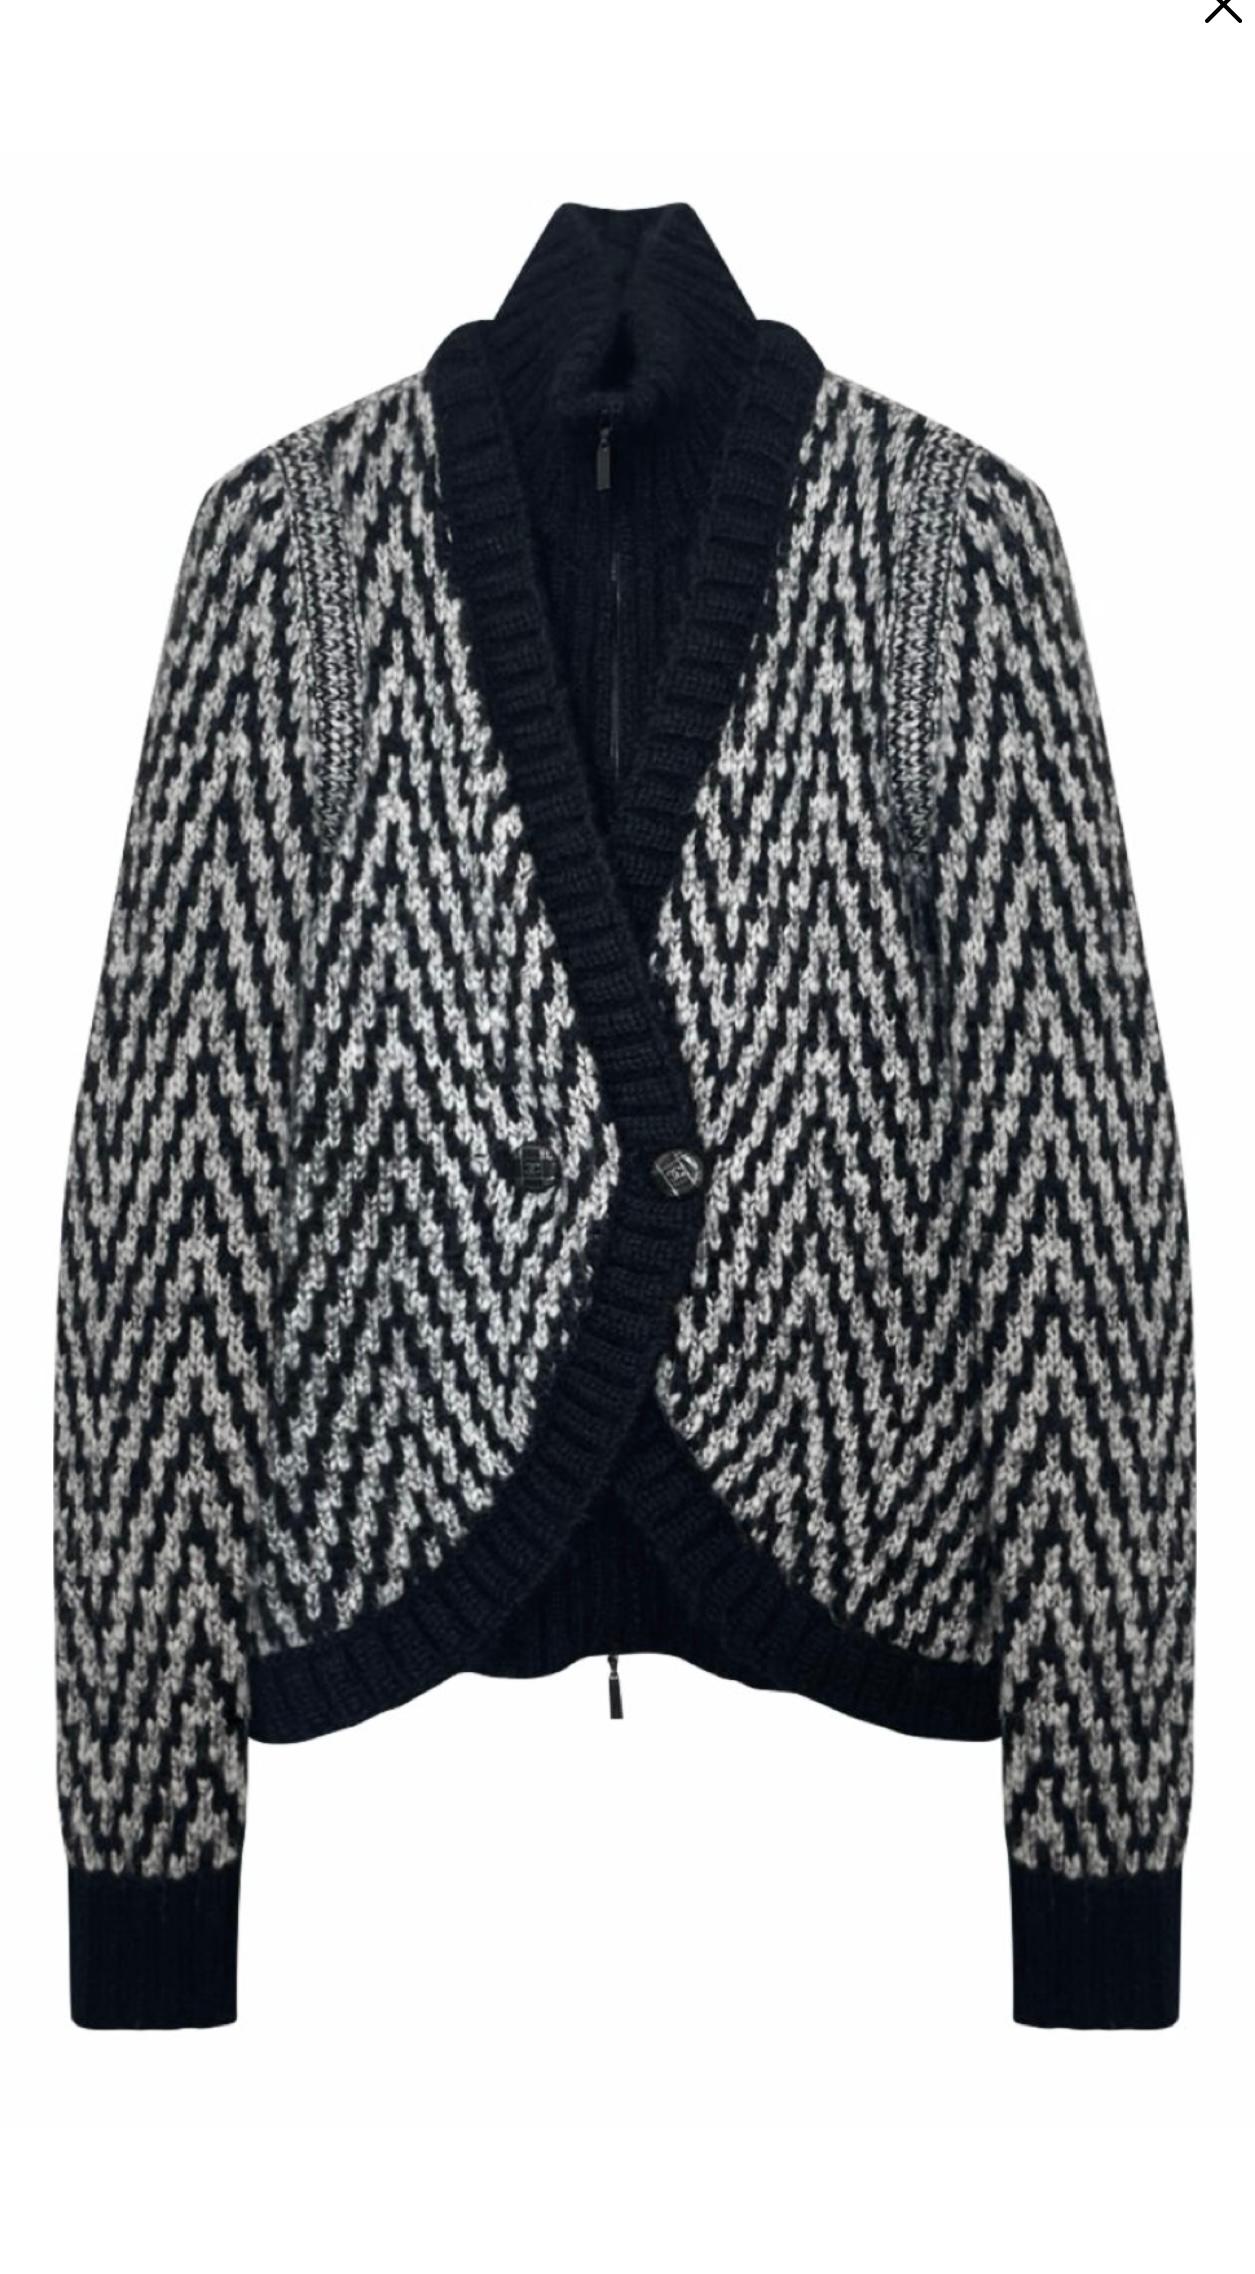 Women's or Men's Chanel CC Jewel Buttons Black Knit Combo Jacket